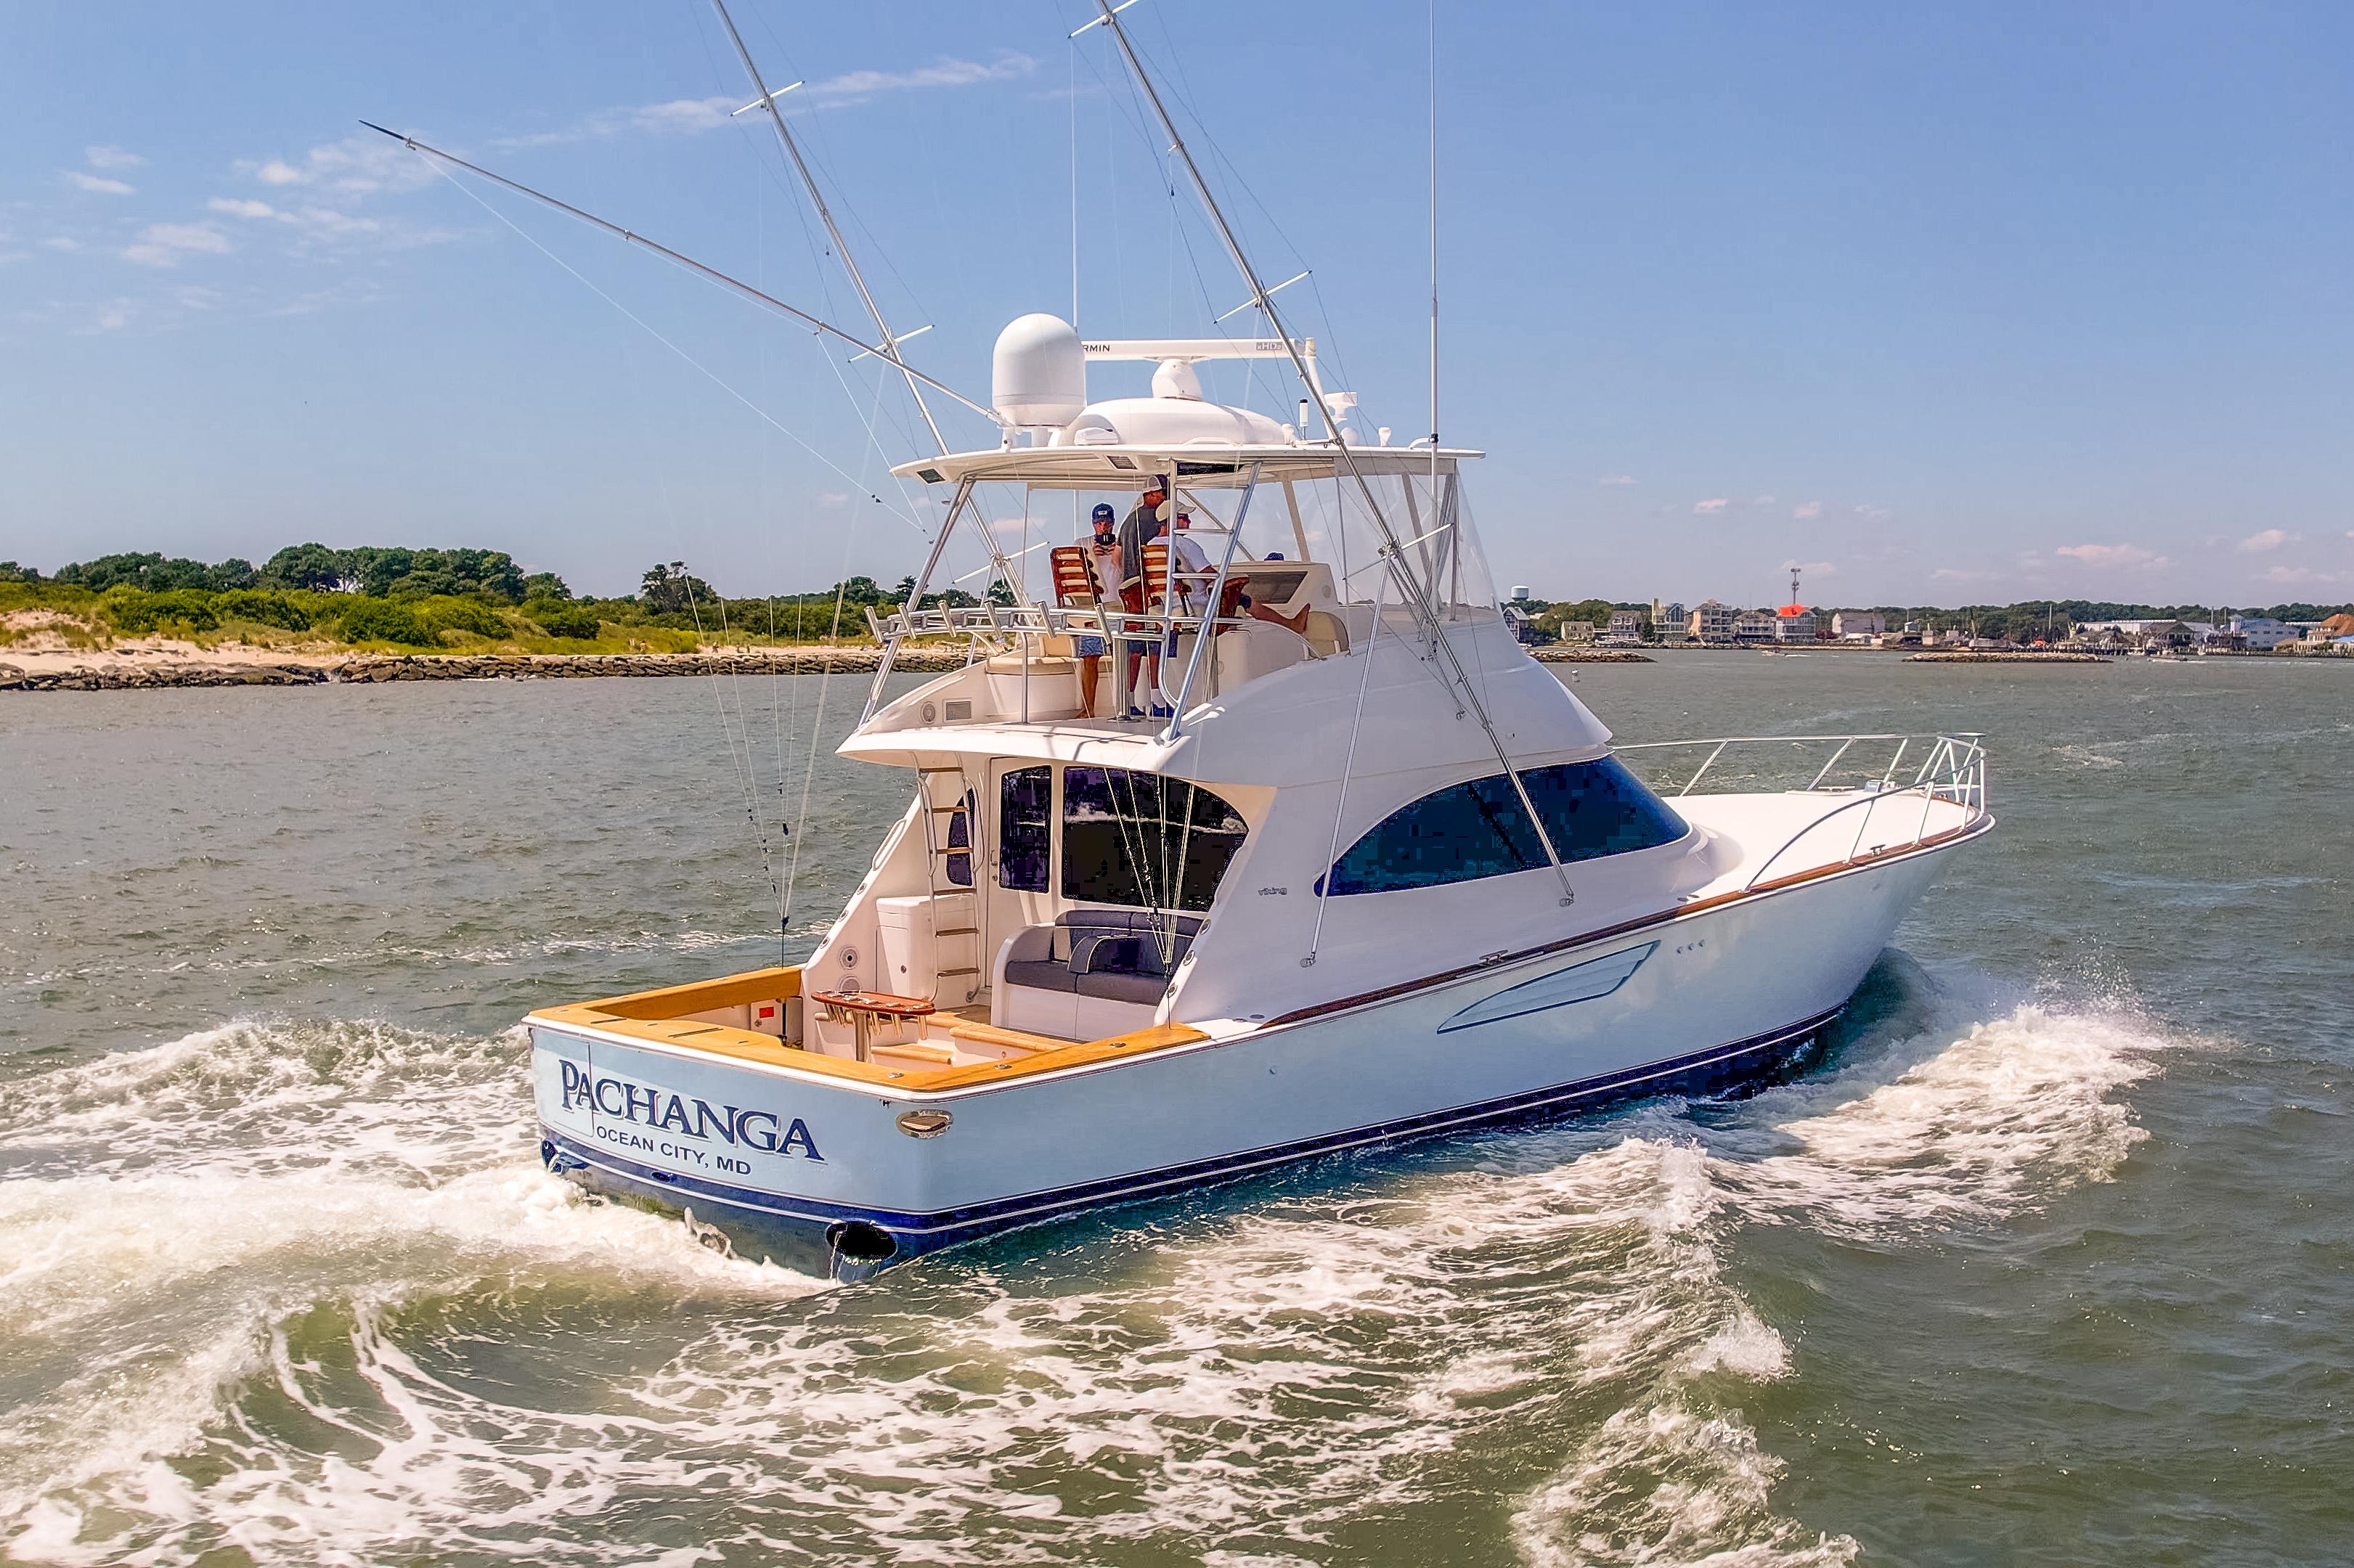 2019 Viking 52 Convertible, West Ocean City Maryland - boats.com